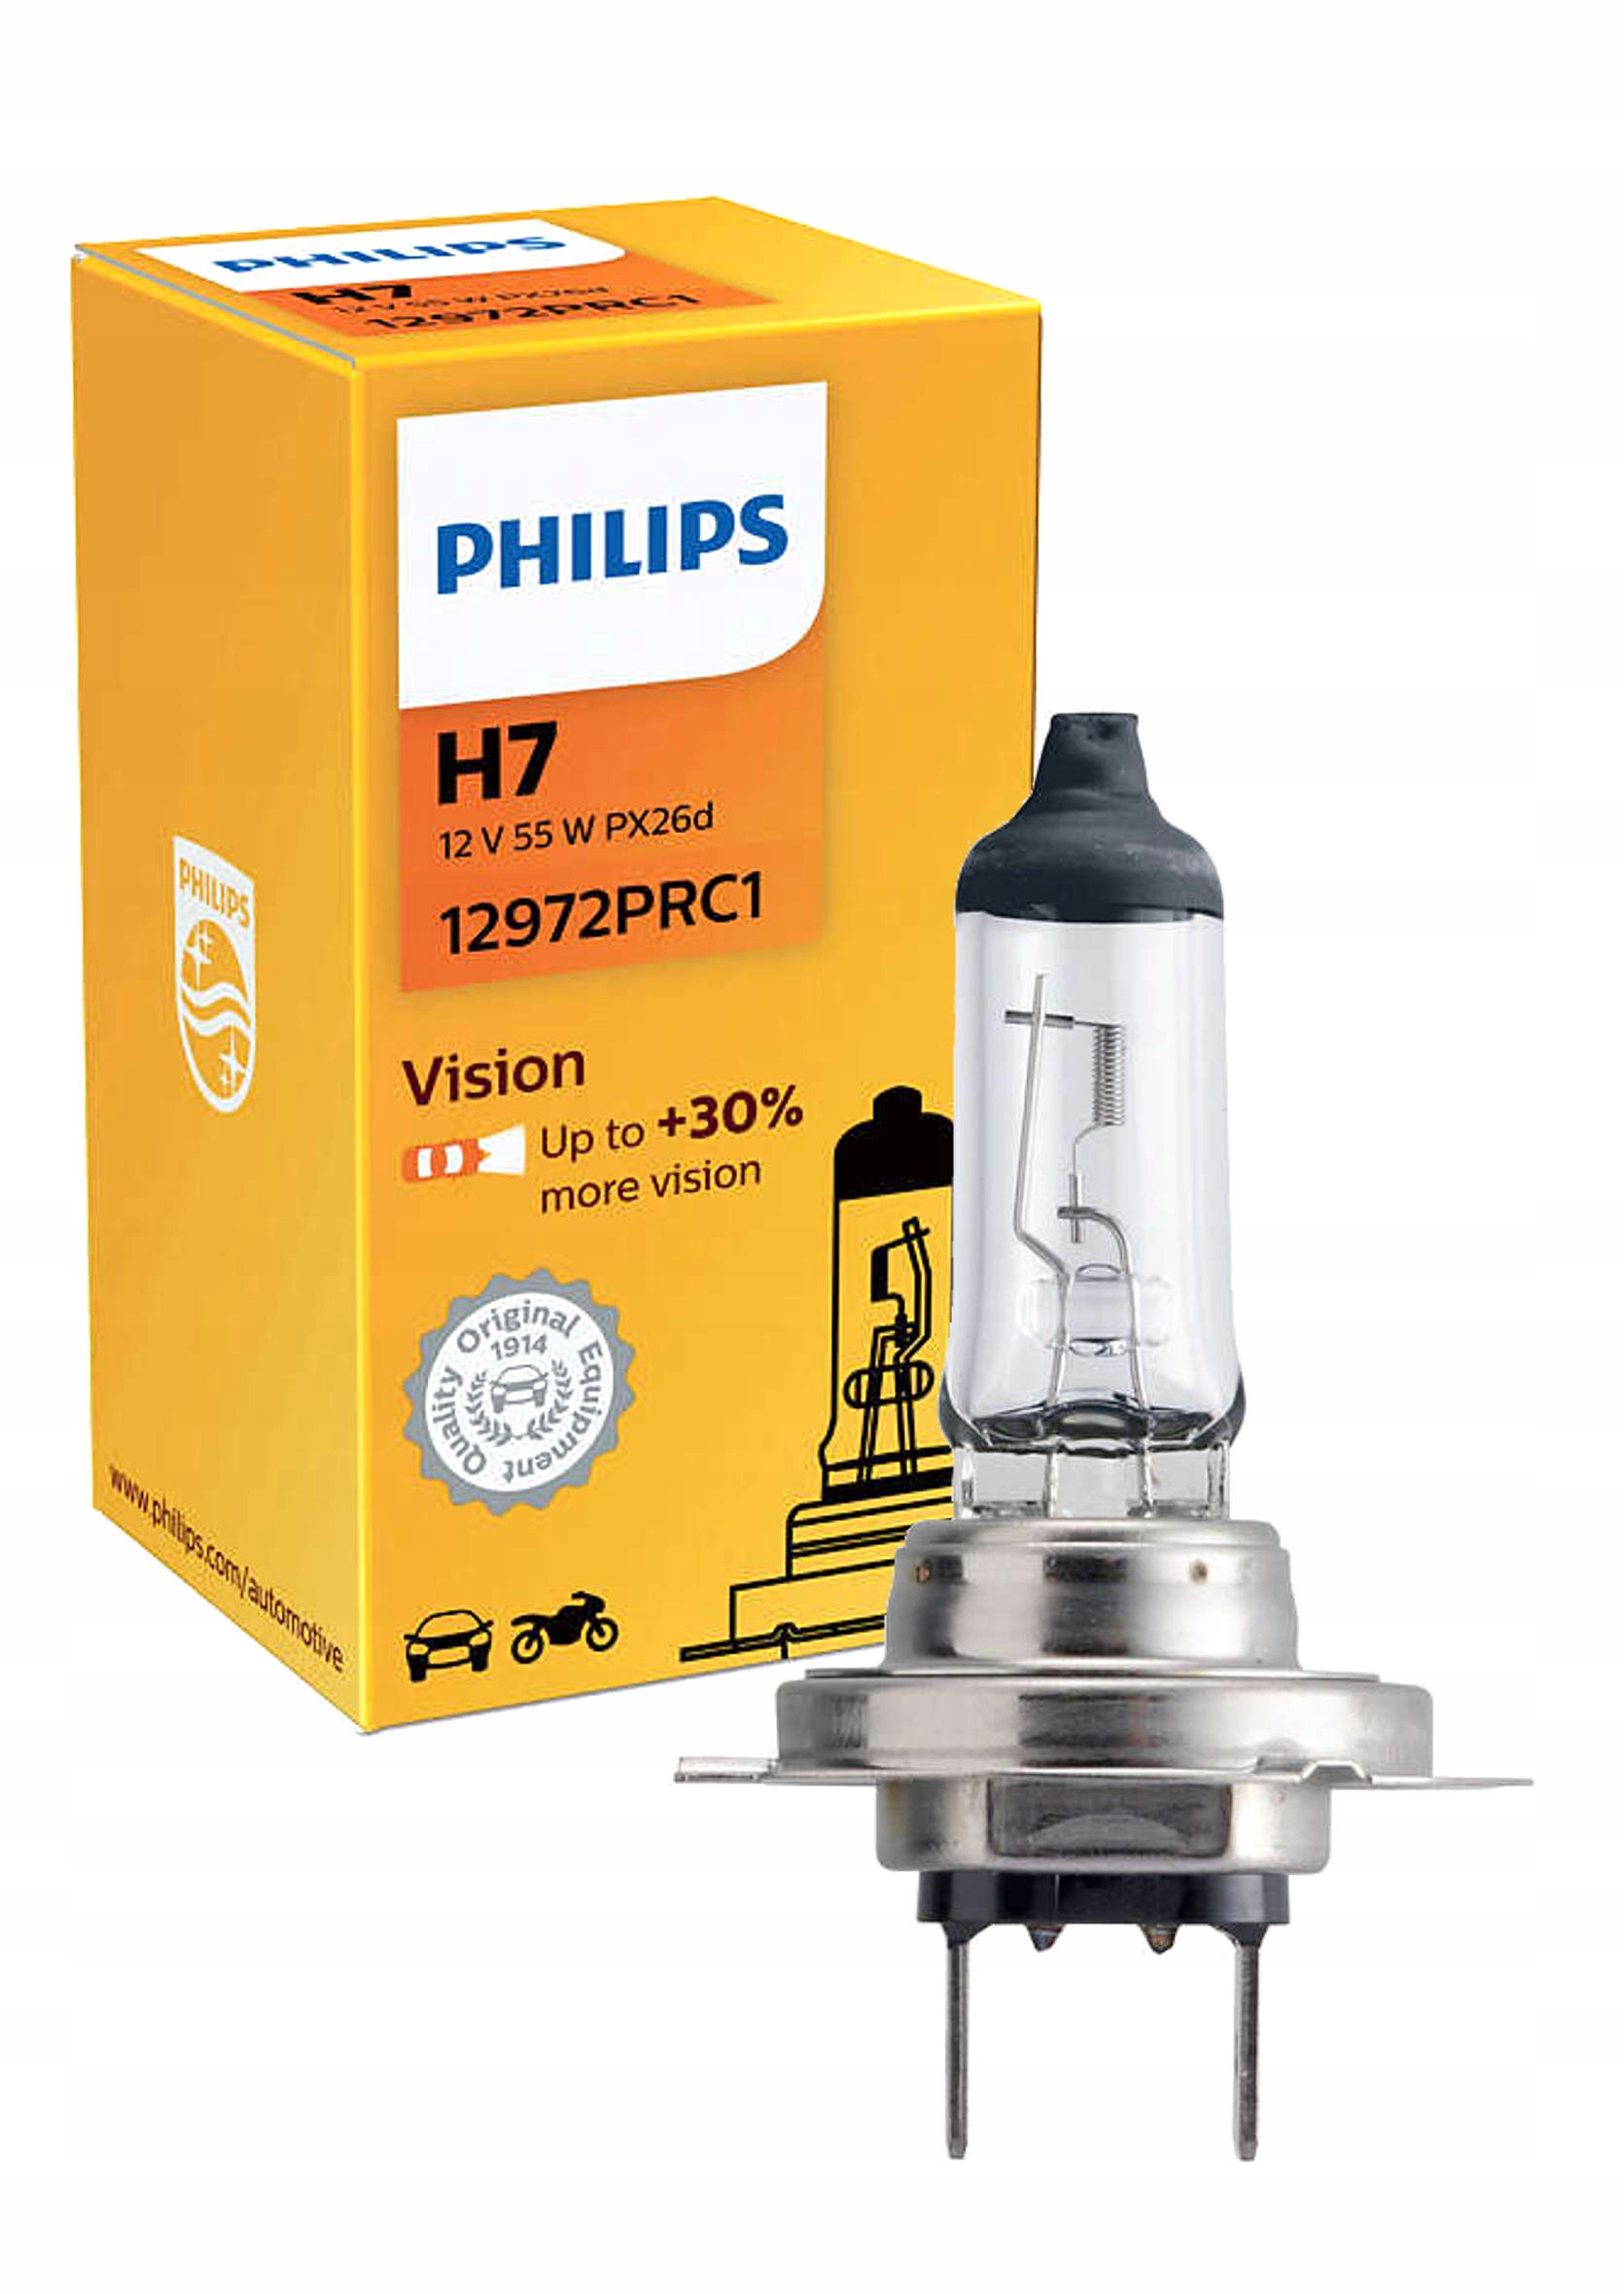 Лампа ближнего света филипс. Лампа автомобильная галогенная Philips Vision +30% 12972prc1 h7 12v 55w 1 шт.. Лампочки Philips 12972prc1. Лампа h7 Premium 12v 55w px26d, Philips, 12972prc1. Лампа h-7 12v 55w Philips (12972pr) Premium +30% 1 шт.